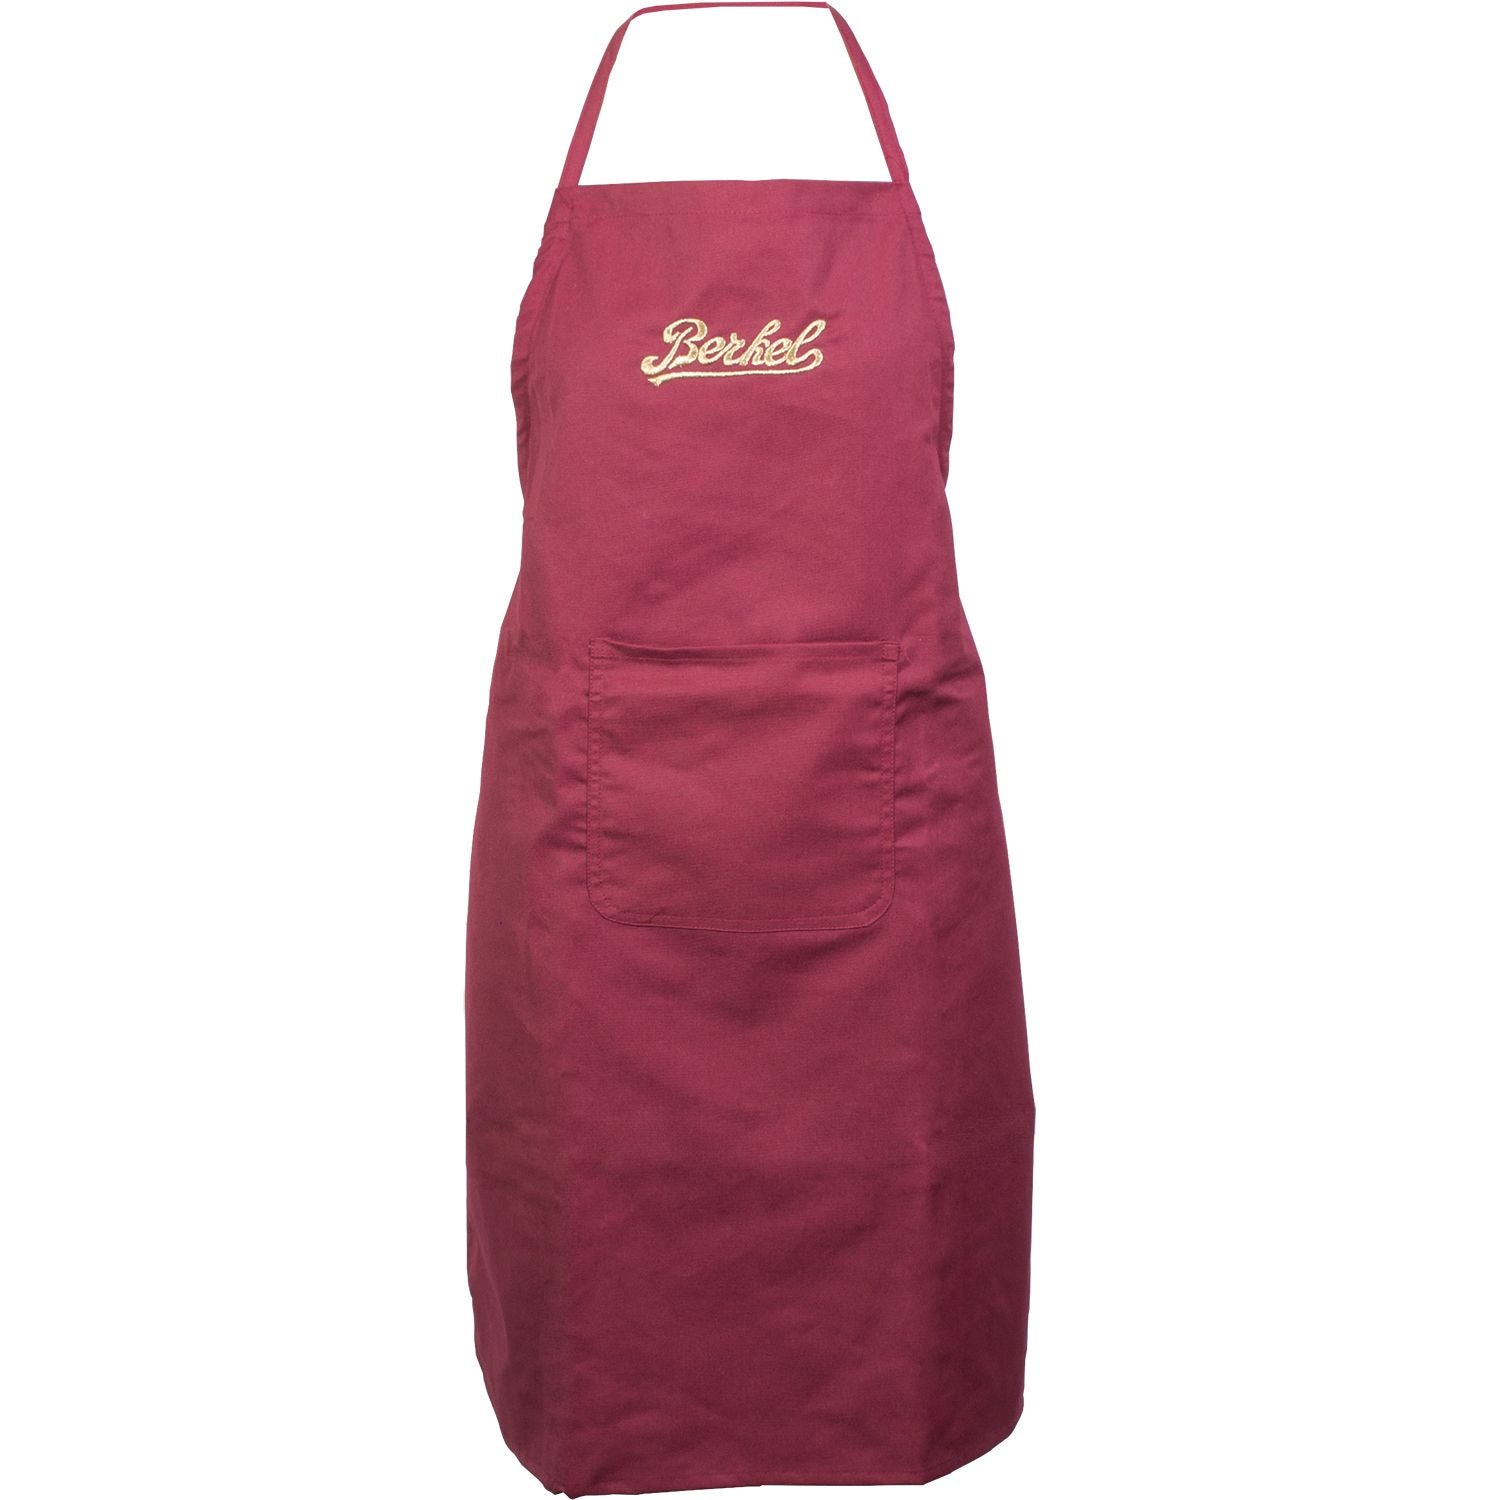 Berkel Red cotton apron